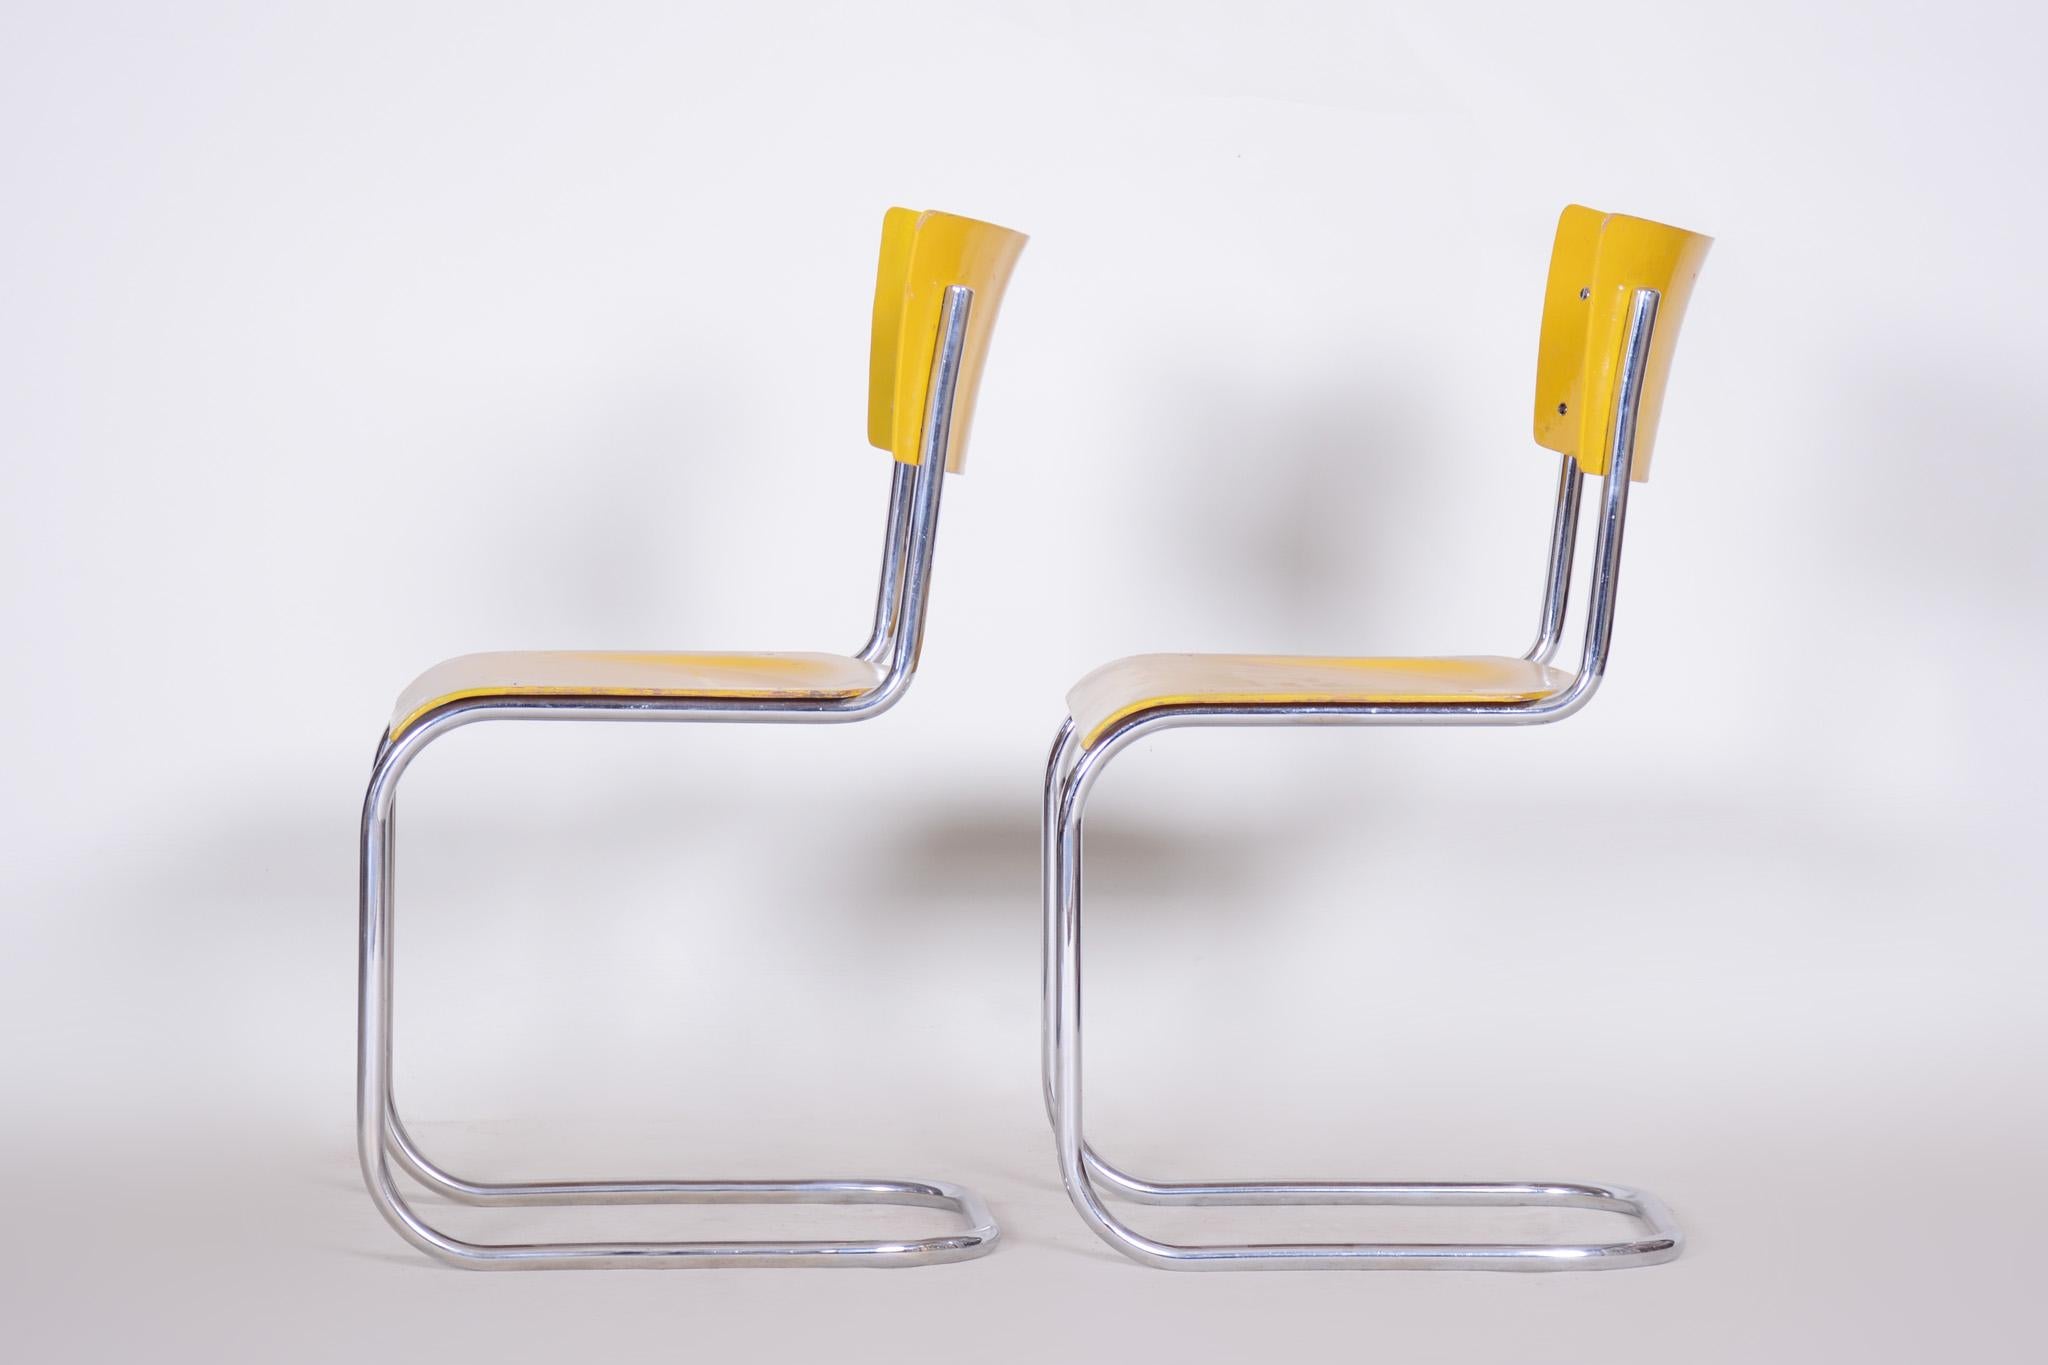 Original Condition Czech Bauhaus Yellow Pair of Chairs by Mart Stam, 1930s 2